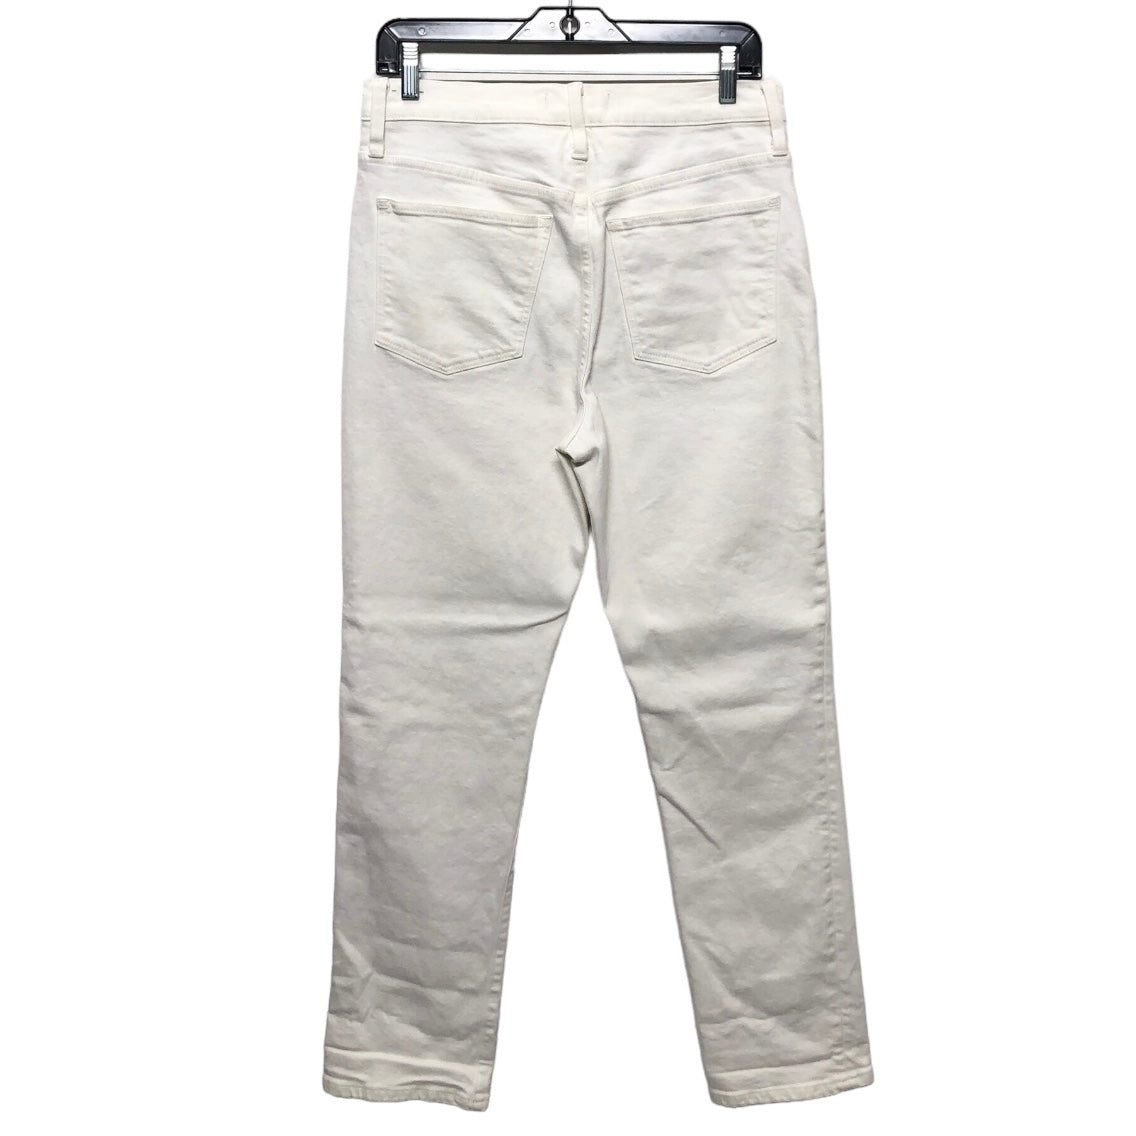 White Denim Jeans Boyfriend Madewell, Size 4